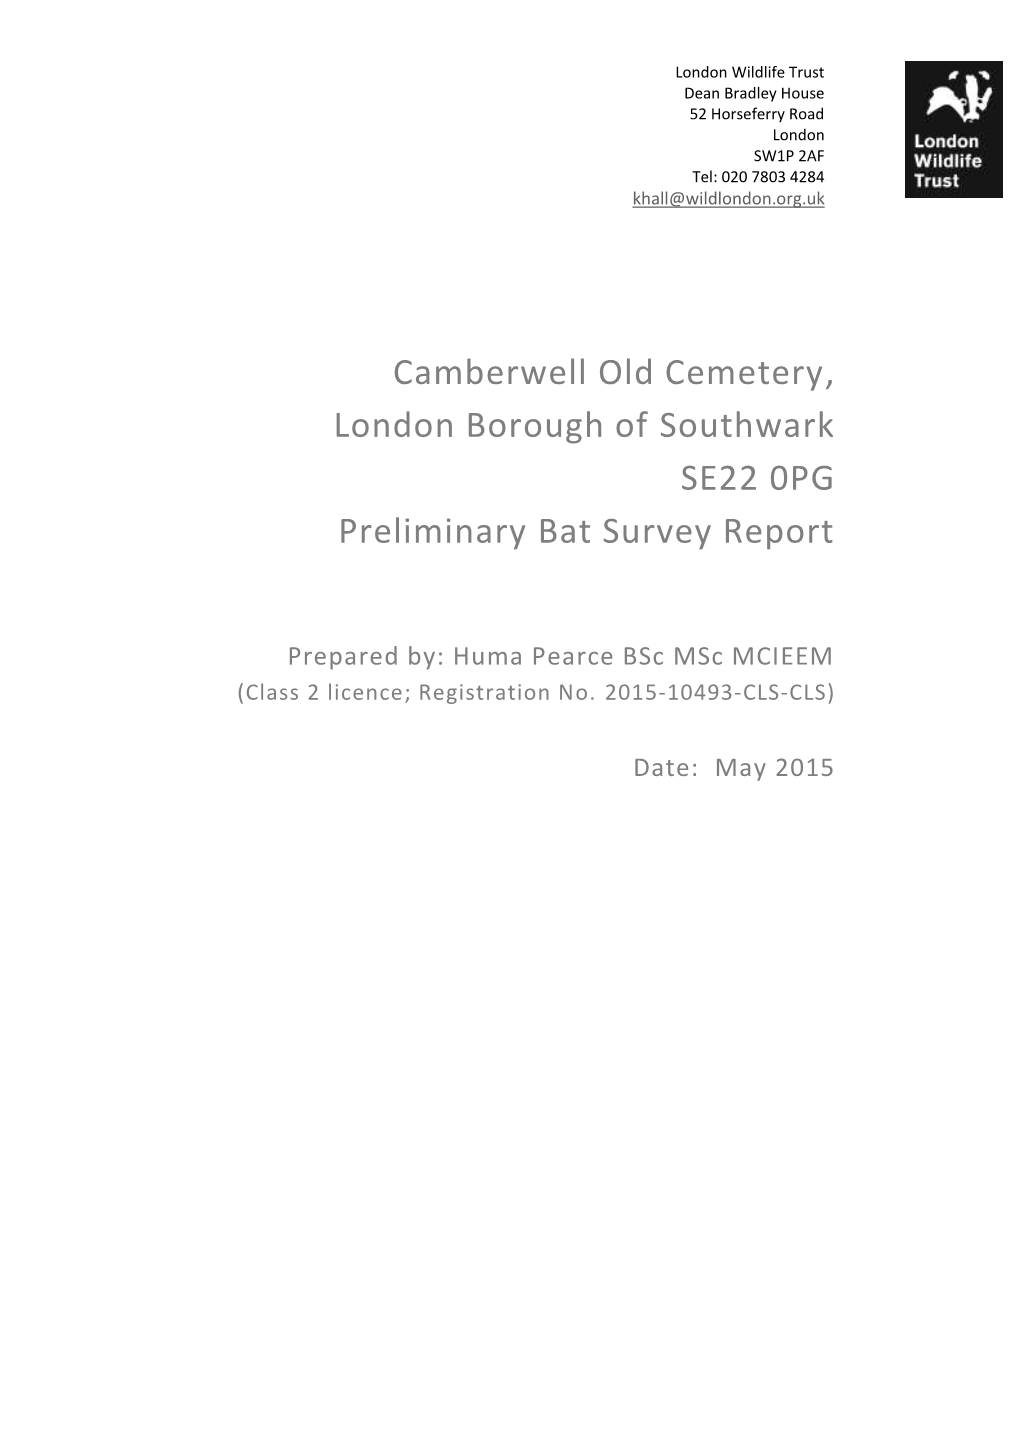 Camberwell Old Cemetery, London Borough of Southwark SE22 0PG Preliminary Bat Survey Report